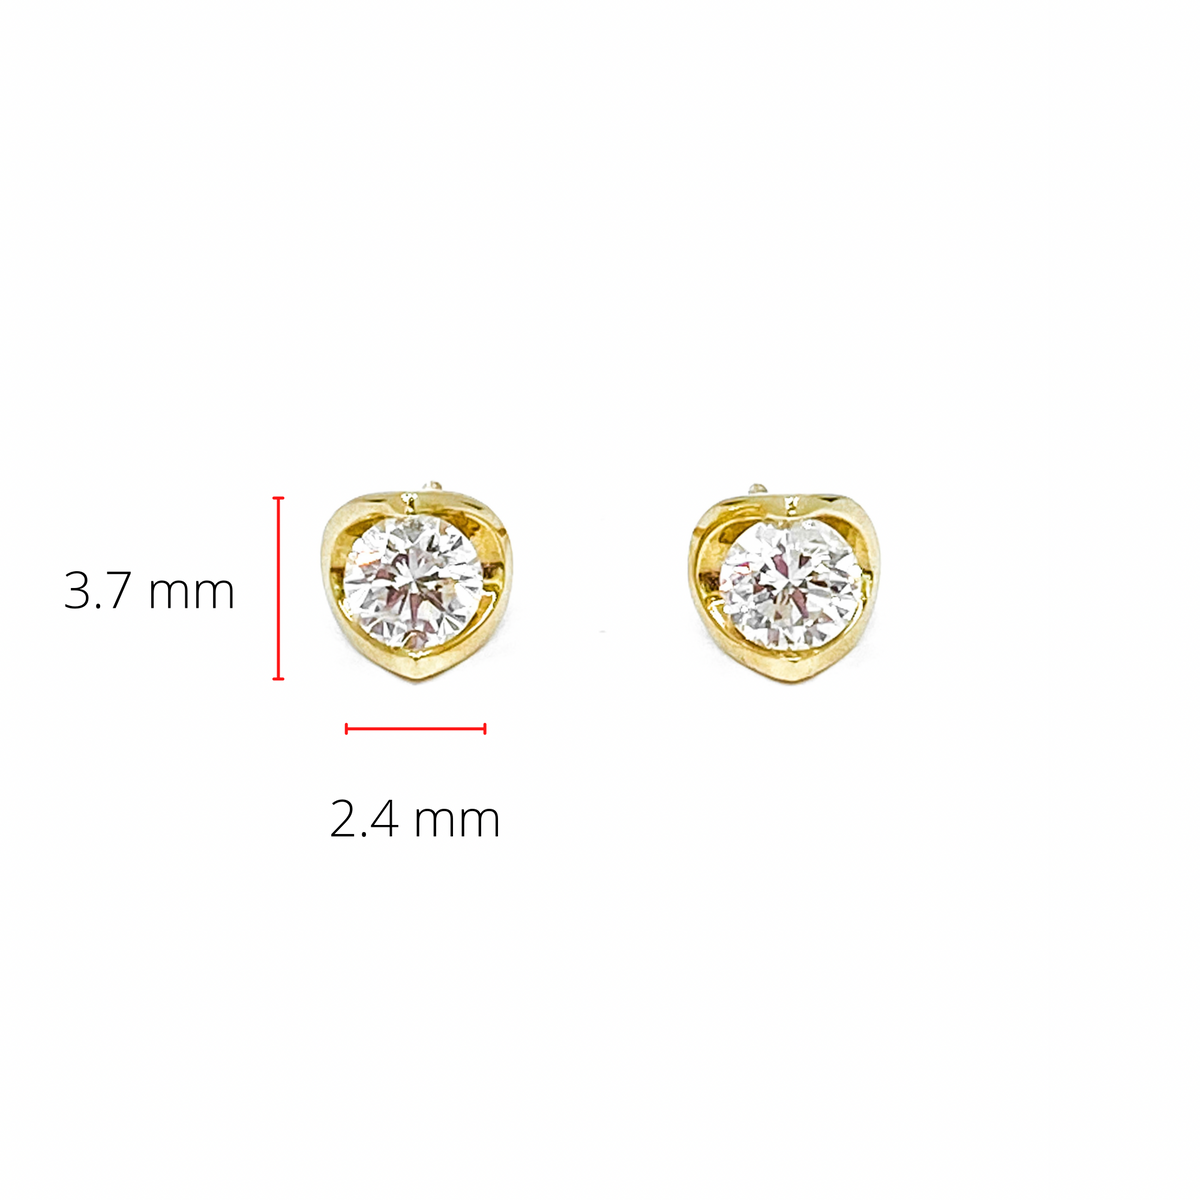 14K Yellow Gold 0.10cttw Round Cut Canadian Diamond Stud Earrings